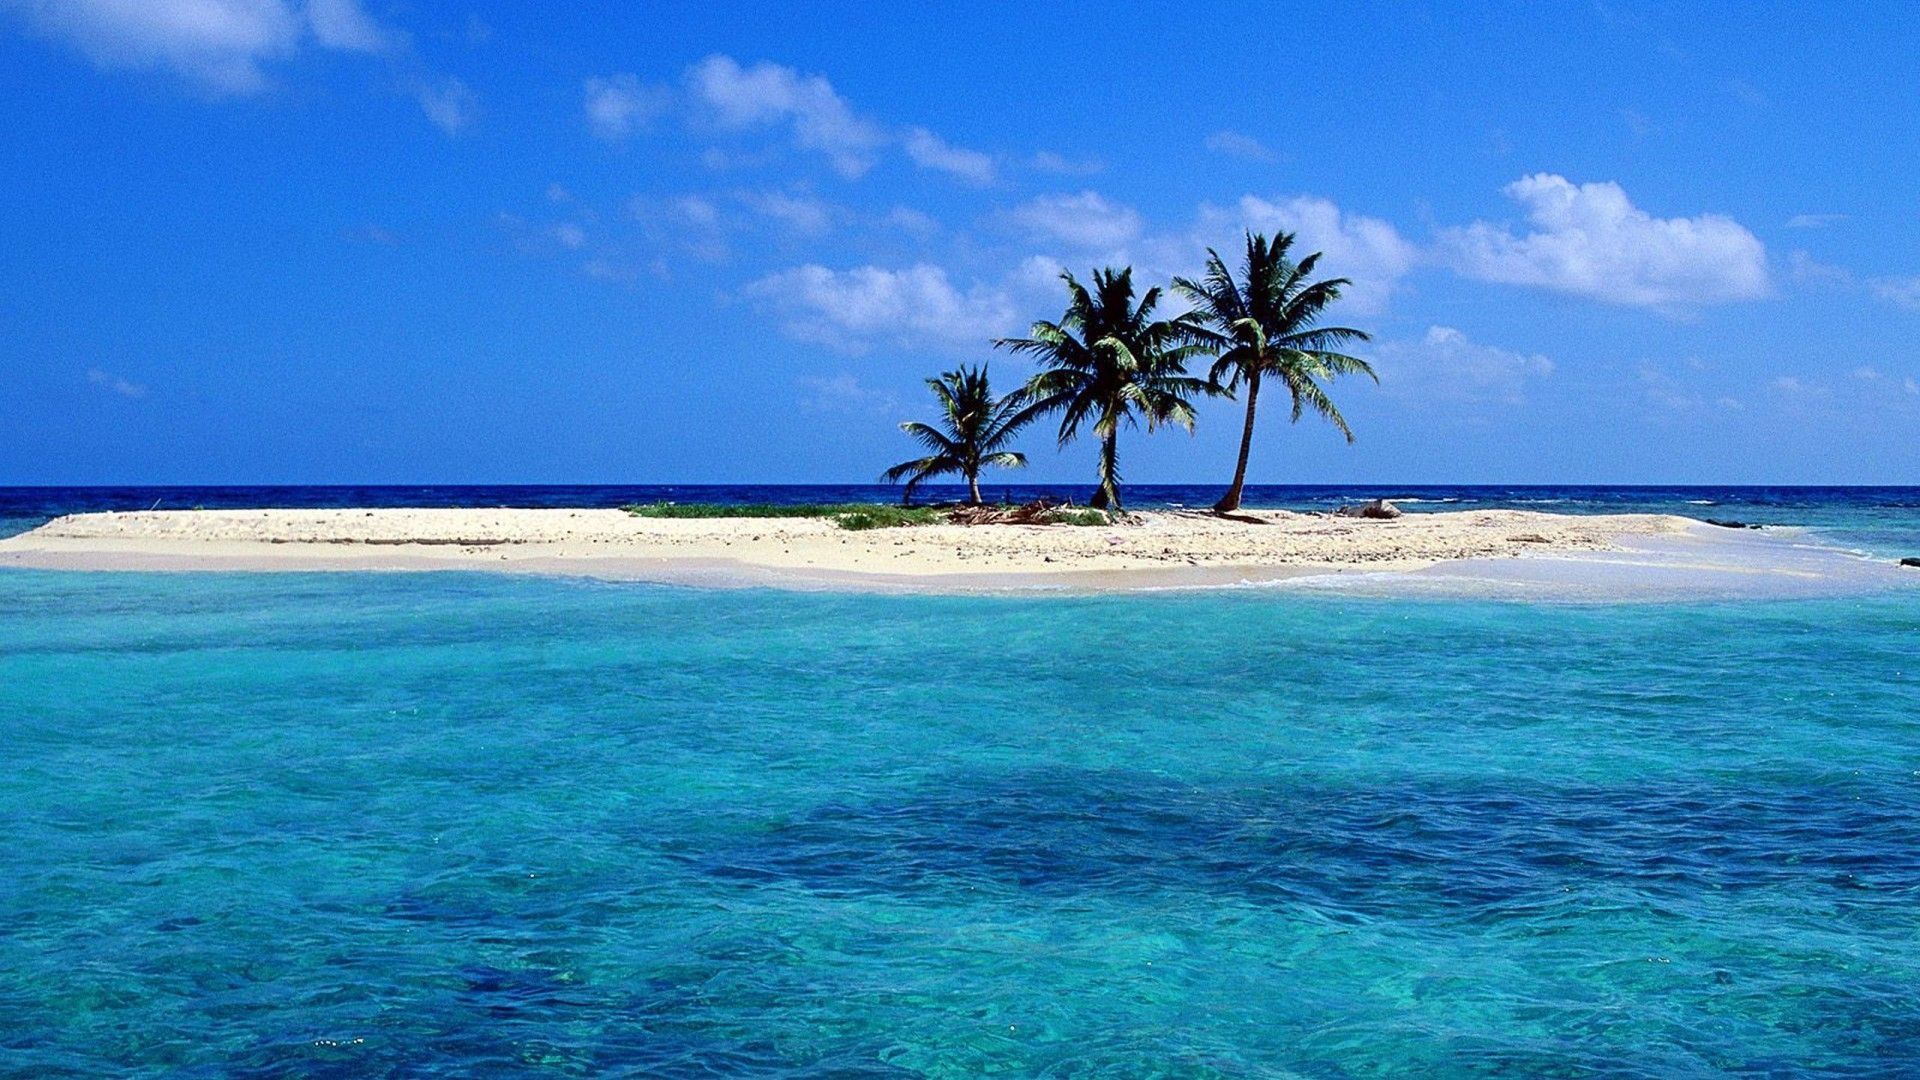 Tropical paradise, Crystal clear waters, Stunning coastline, Exotic destination, 1920x1080 Full HD Desktop